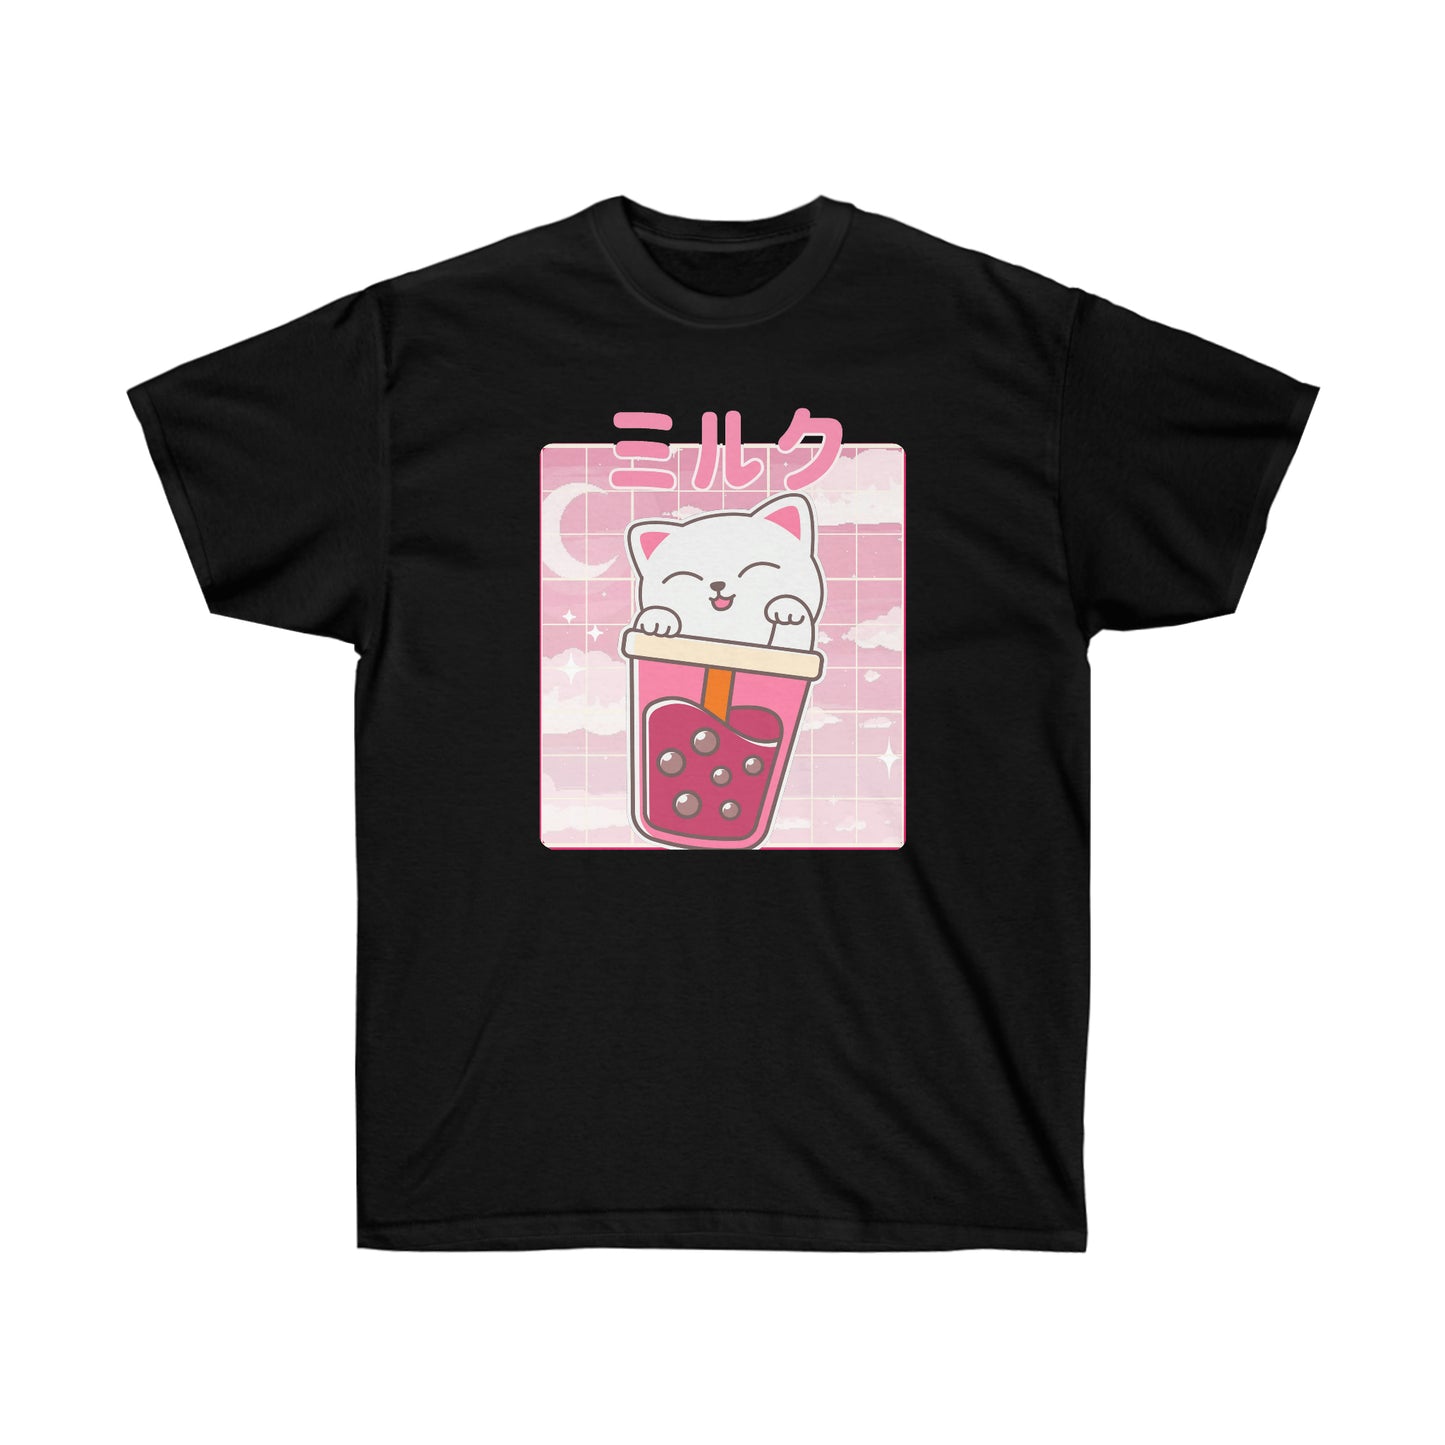 Kawaii Cat shirt Ramen Cute Chibi Kitten Japanese Yume Kawaii shirt Boba Tea Kawaii clothing T-shirt clothing pocket